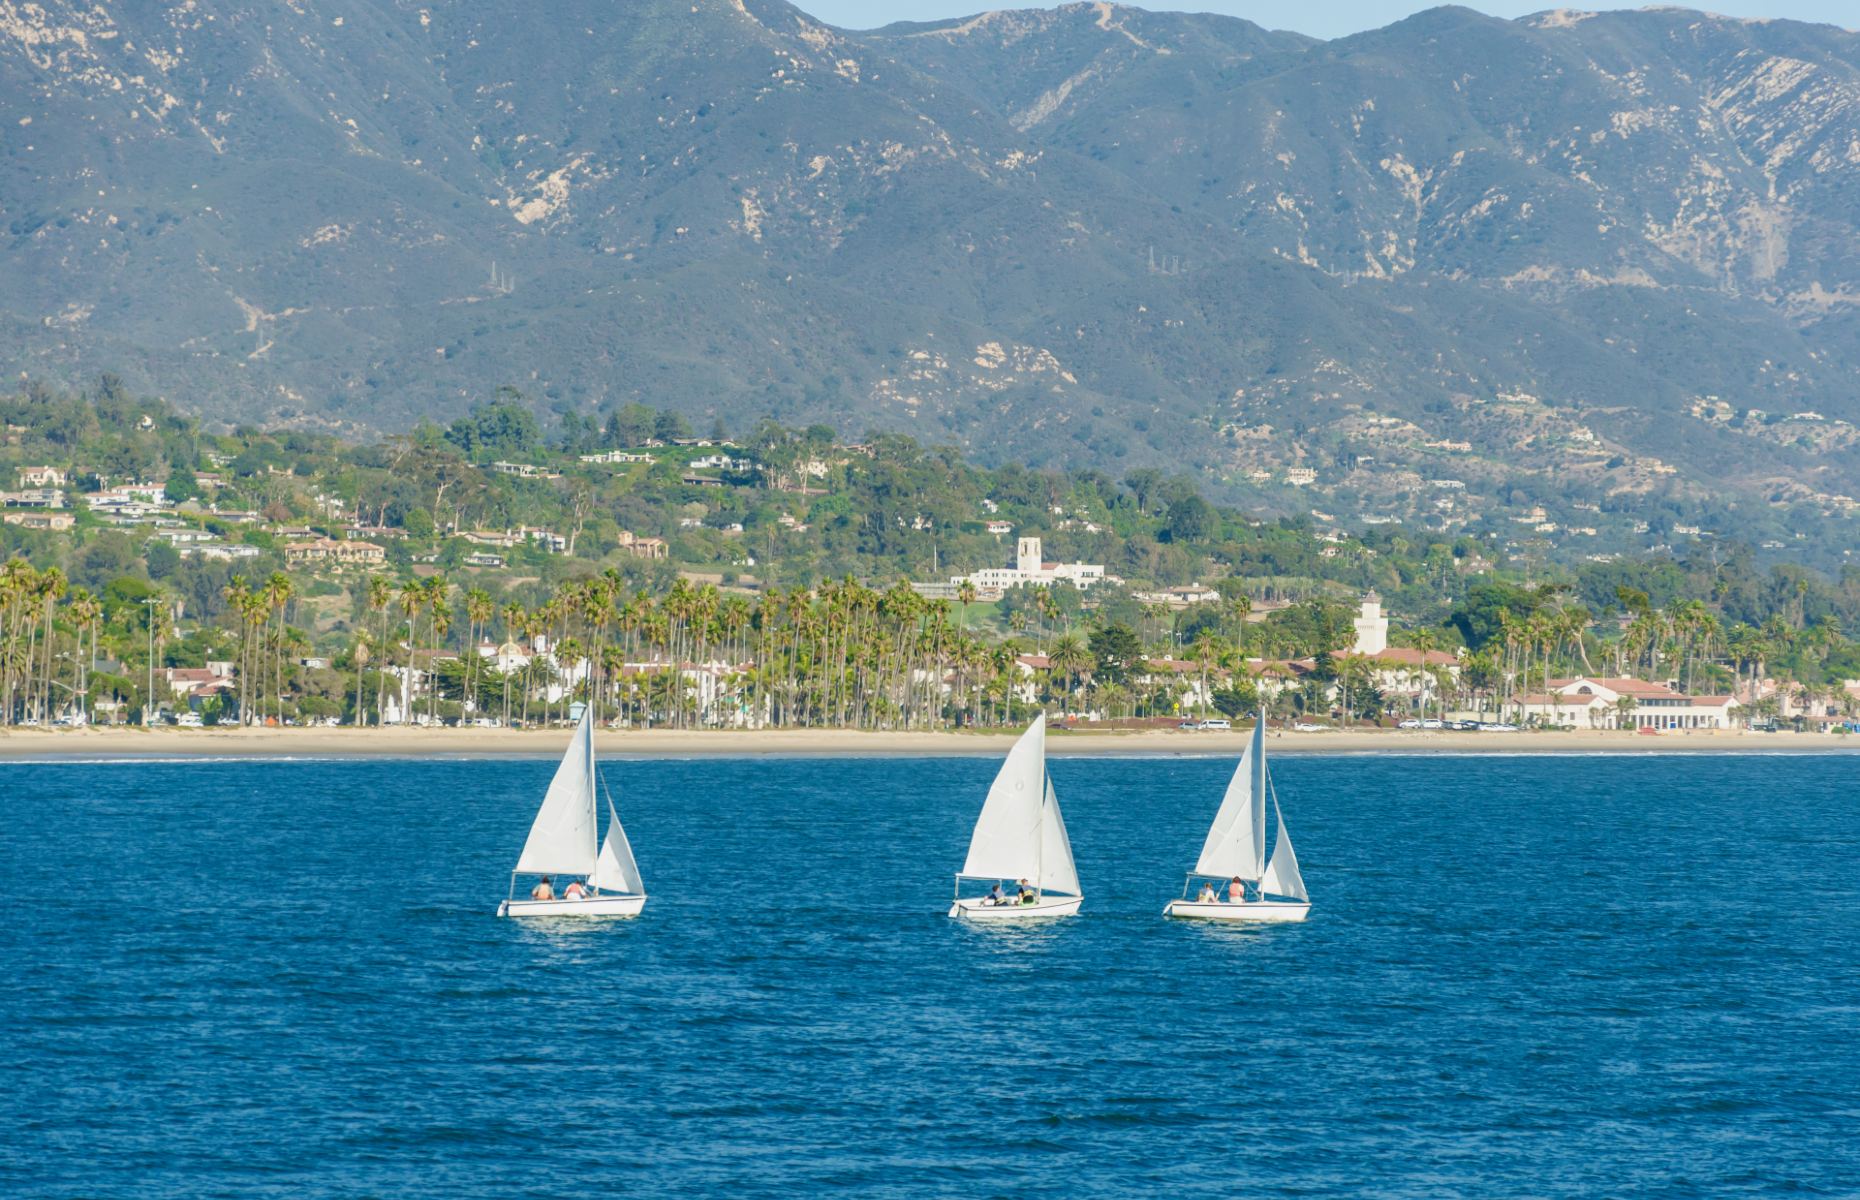 Santa Barbara Sailing (Image: EllenSmile/Shutterstock)